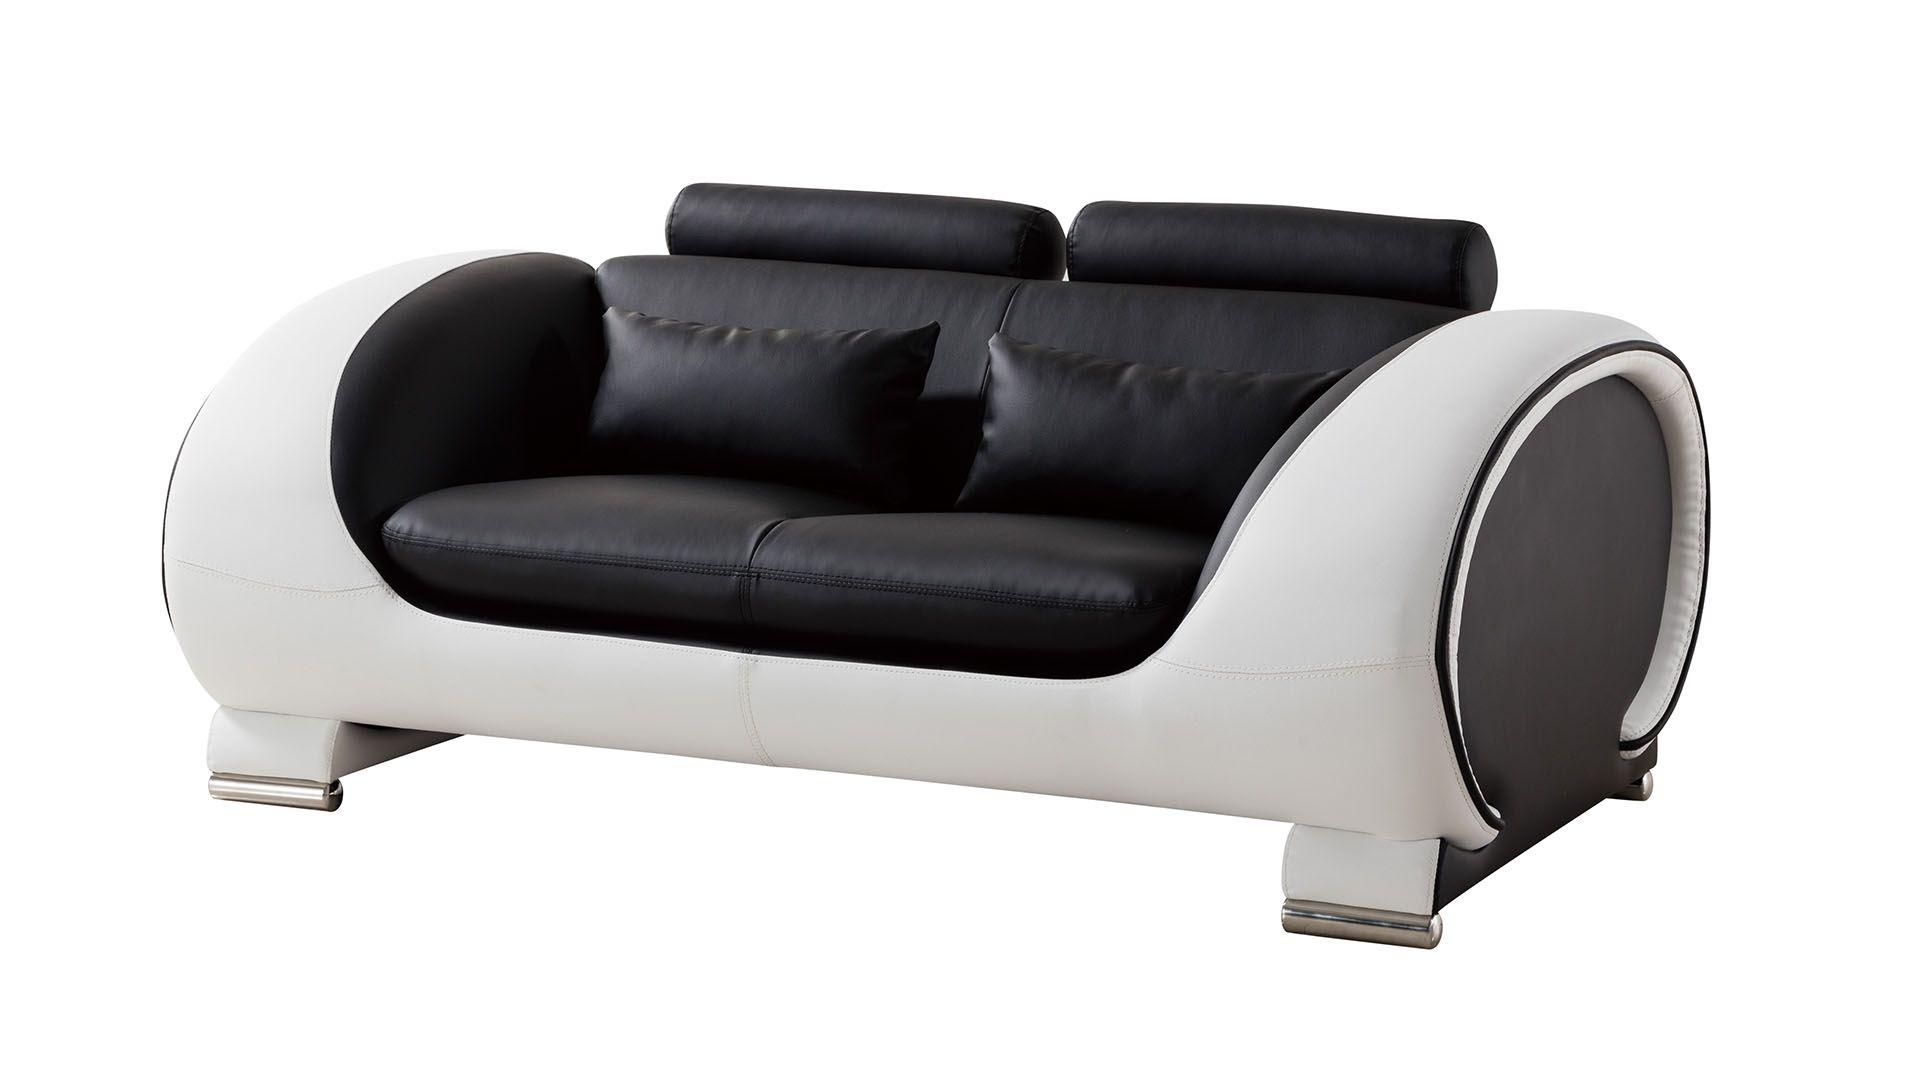 

                    
American Eagle Furniture AE-D802-BK-W Sofa Set White/Black Bonded Leather Purchase 
